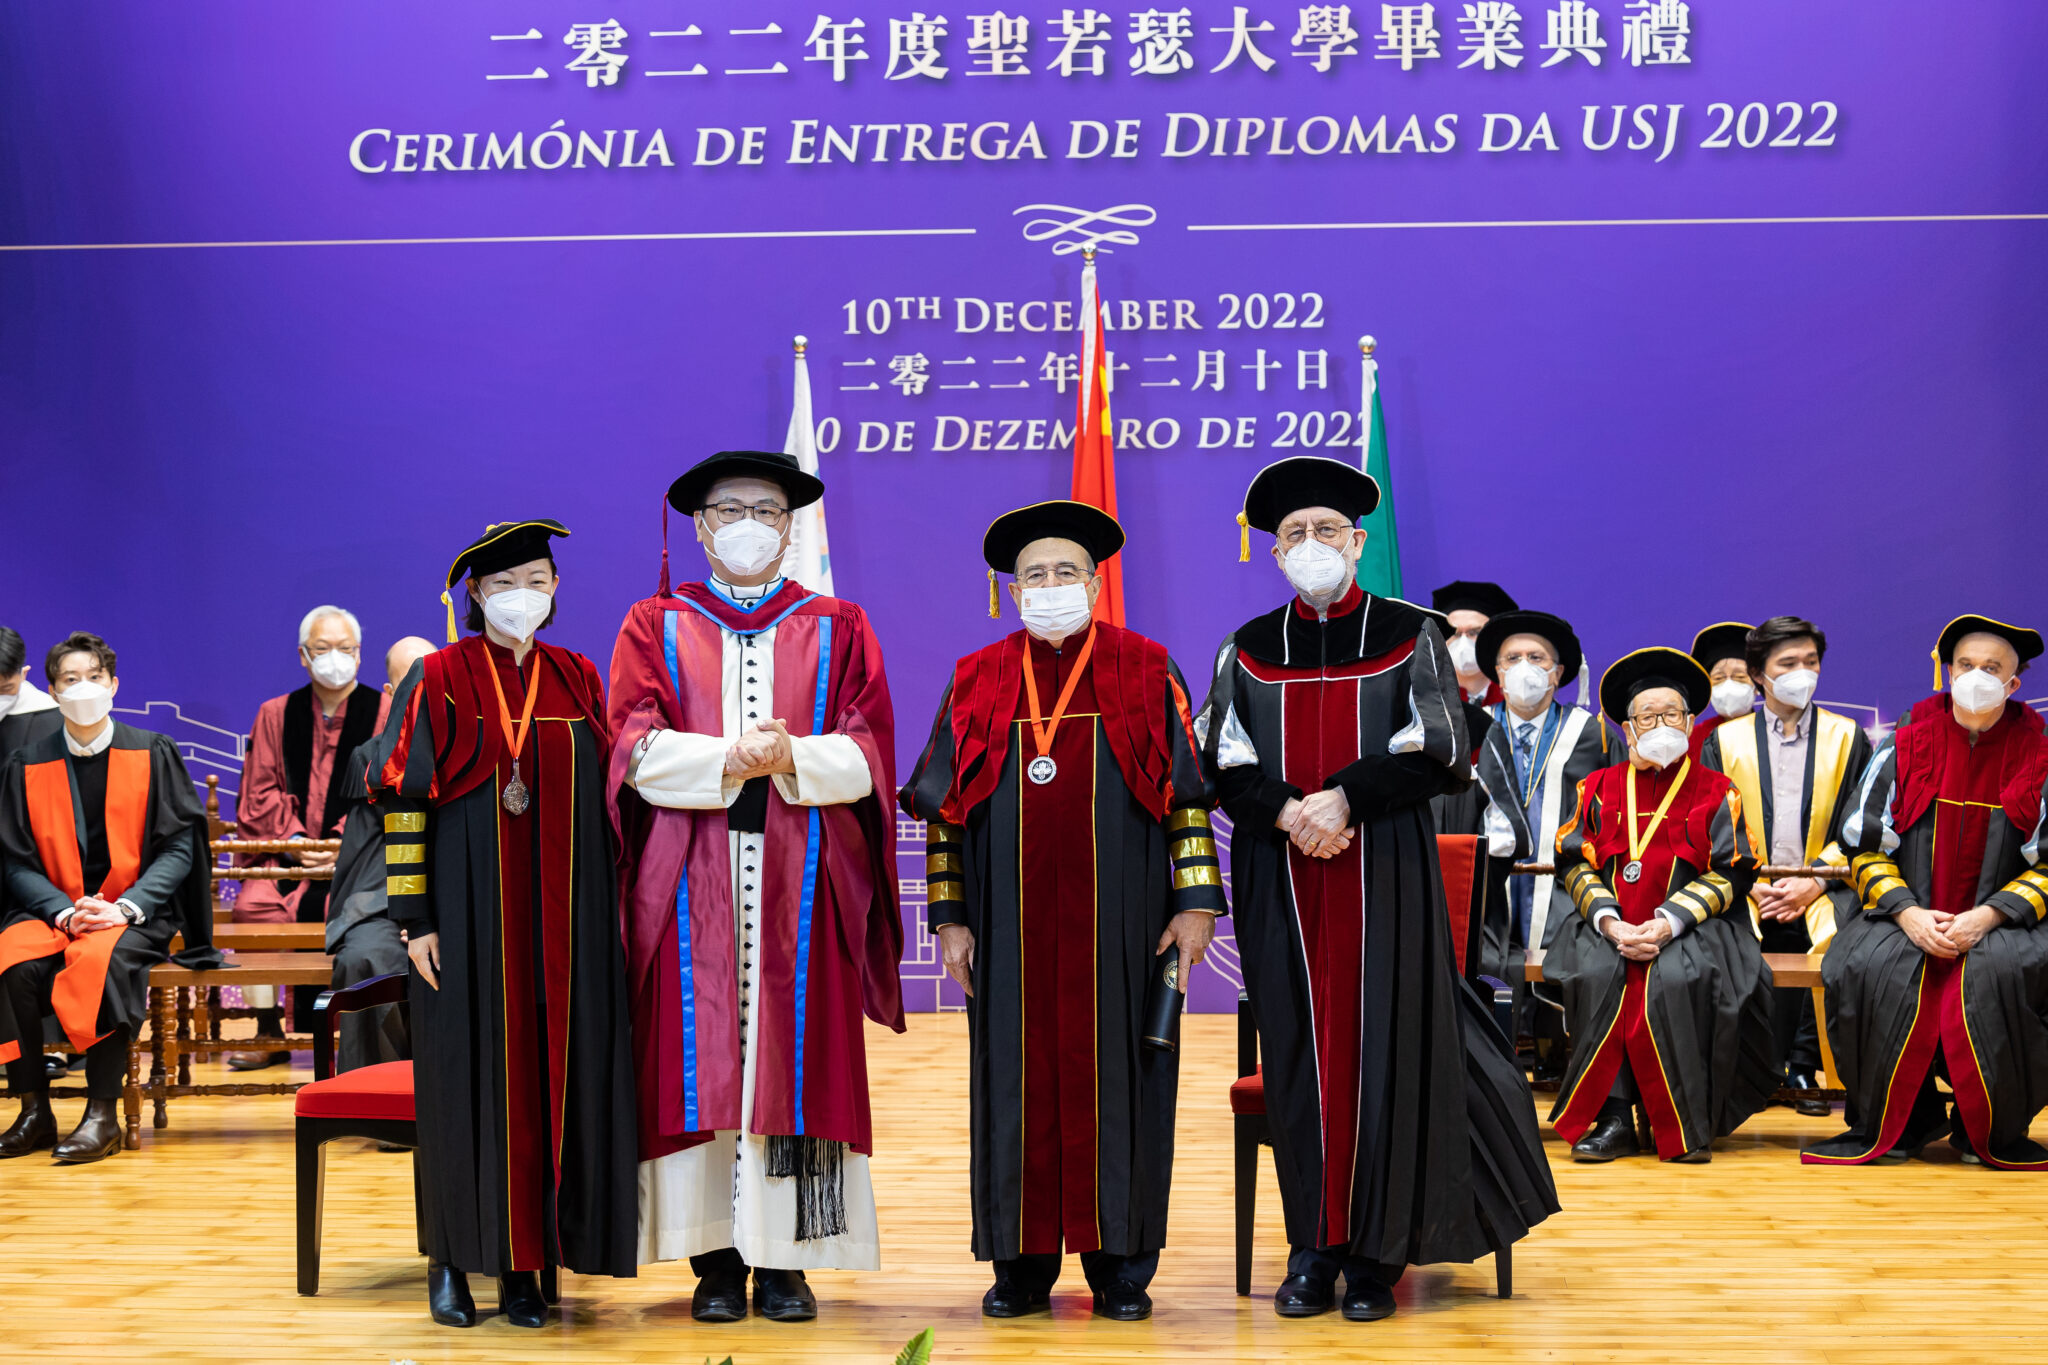 2022 USJ Graduation Ceremony and Conferral of Doctoral Honoris Causa